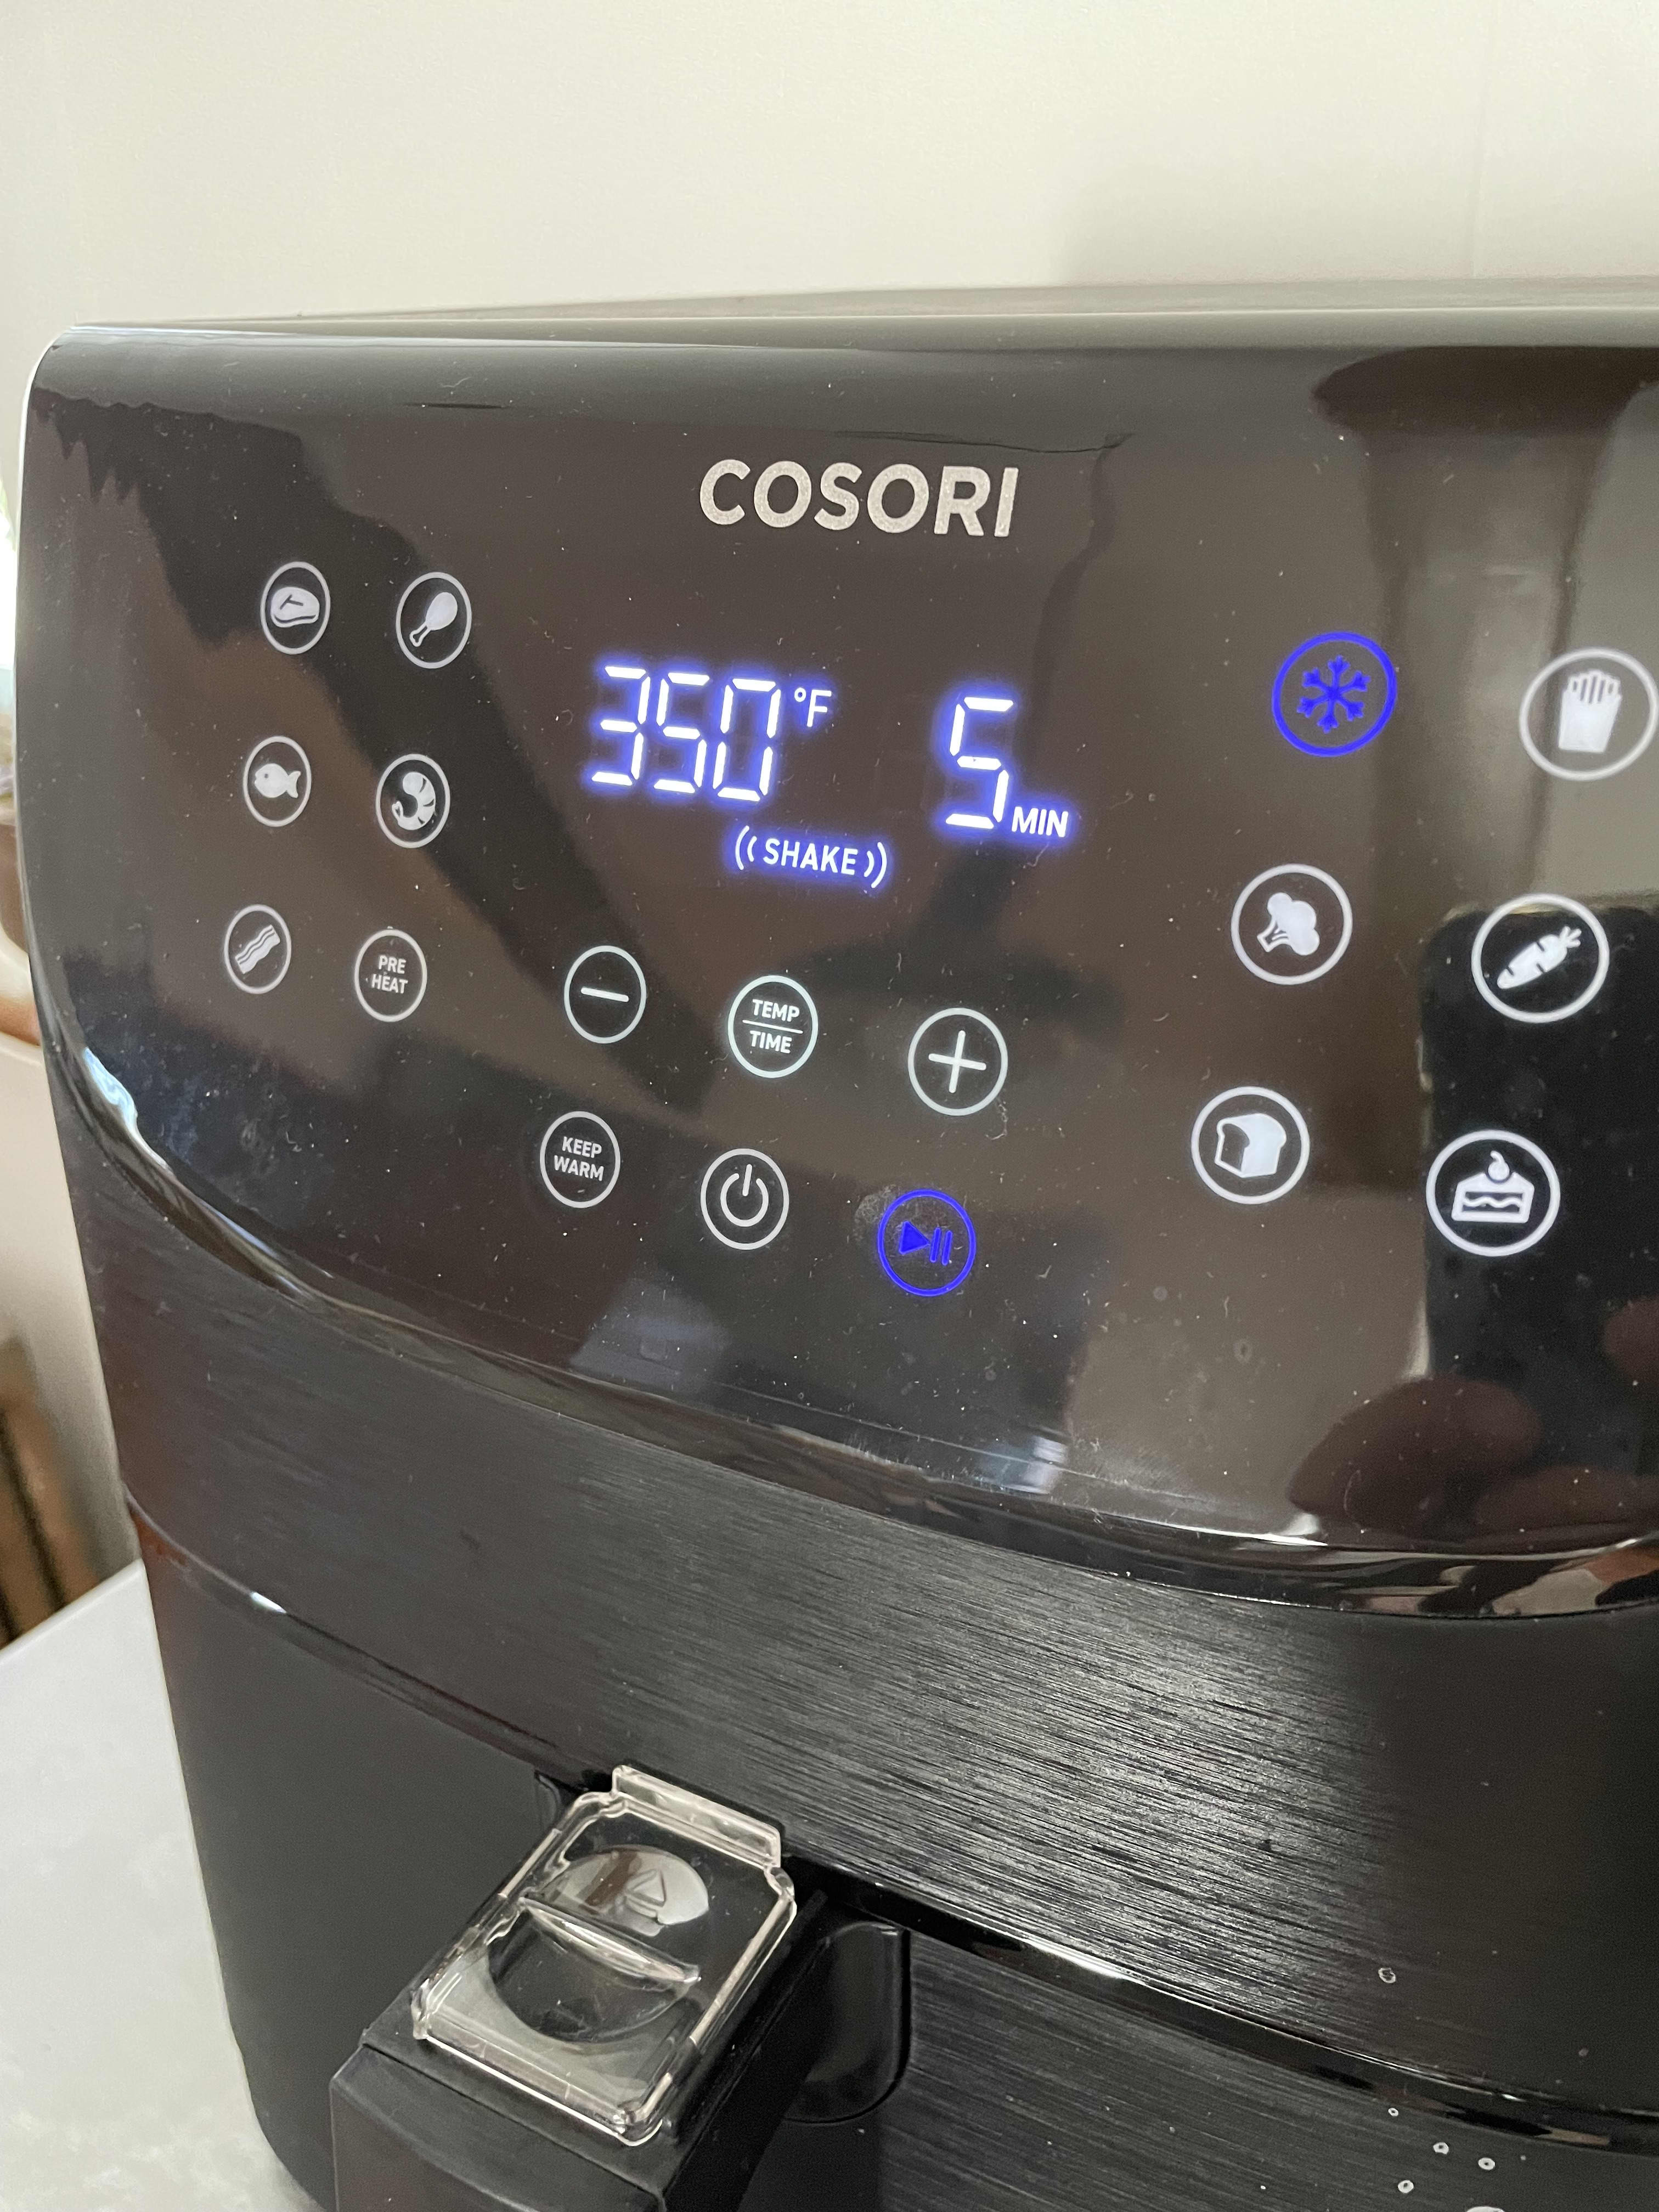 Cosori 3.7-Quart Air Fryer Review